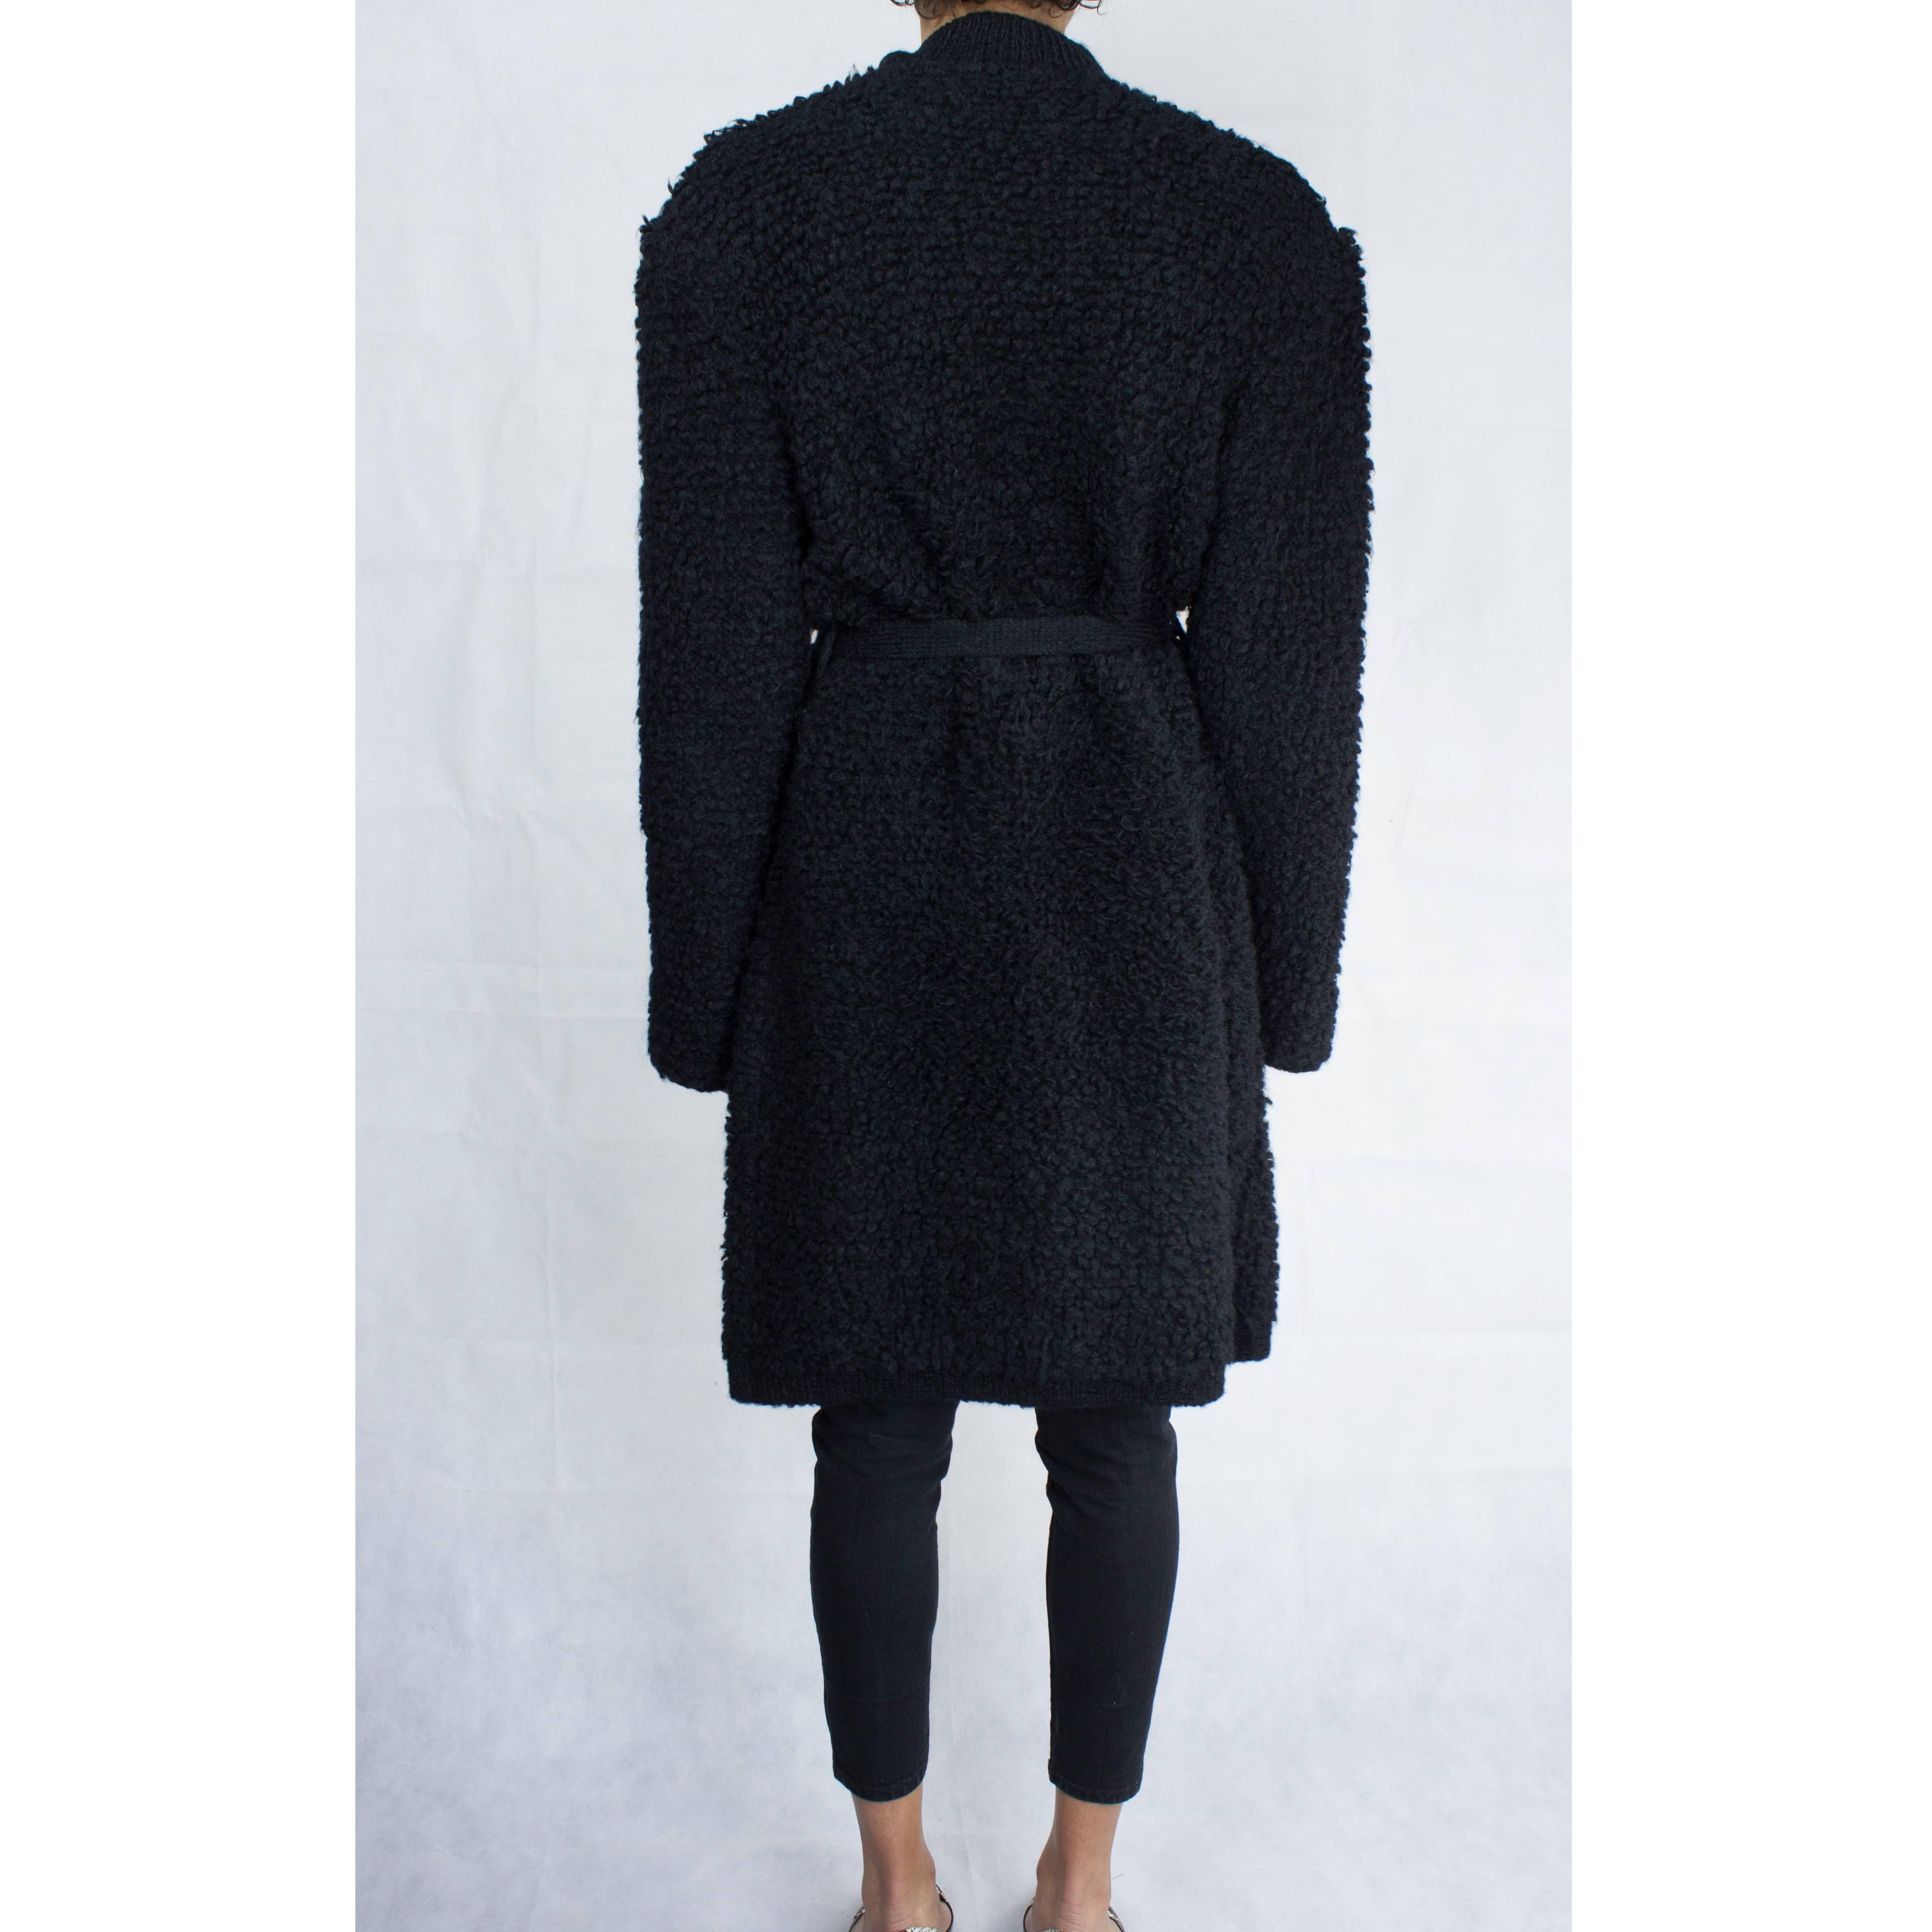 Women's Important Sonia Rykiel knitted black wool coat, circa 1960s